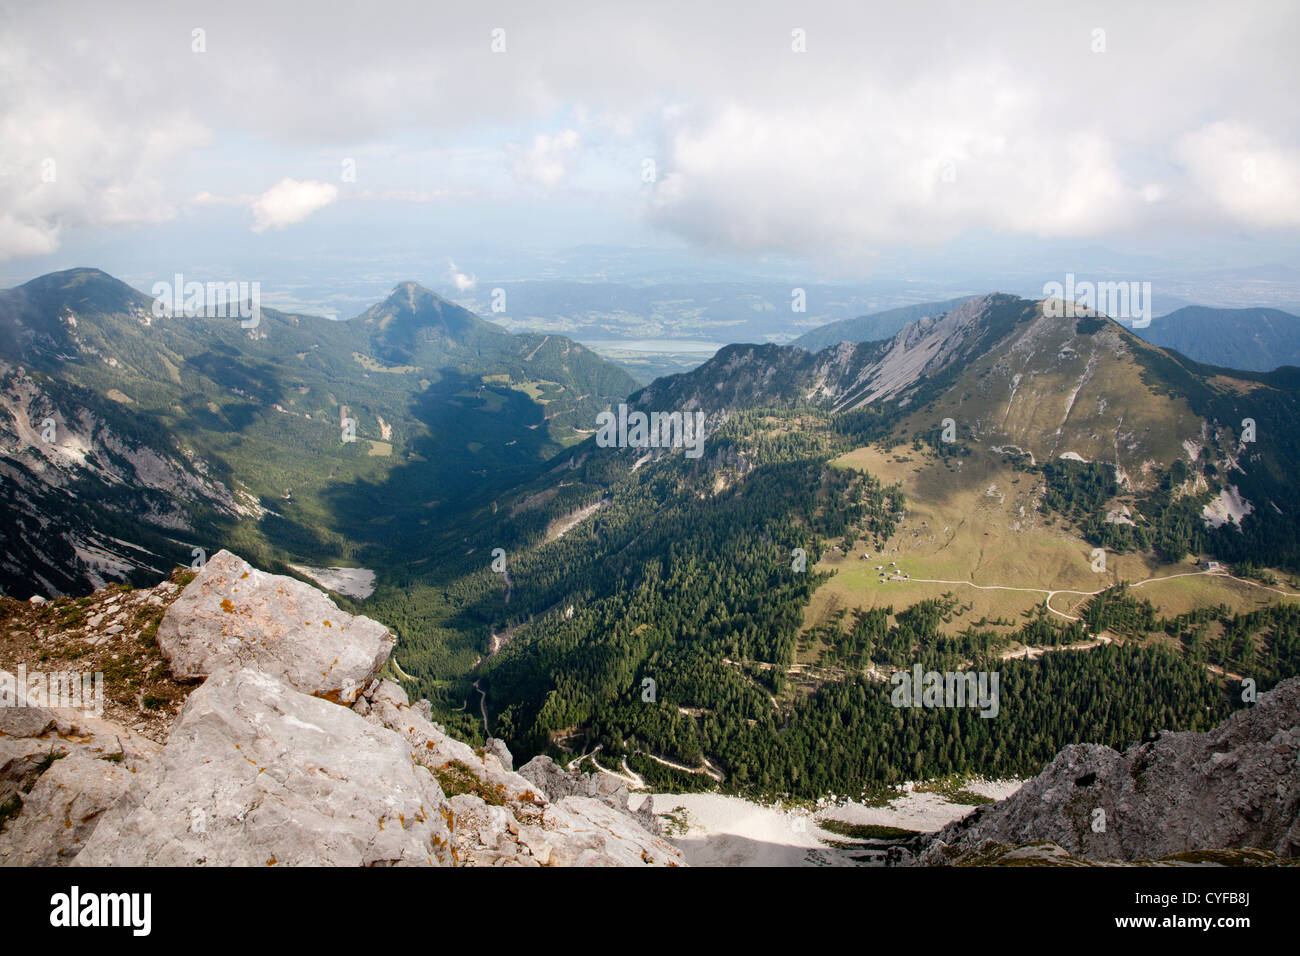 Slowenien - Ausblick vom Hochstuhl Peak - Karavenken Alpen Stockfoto